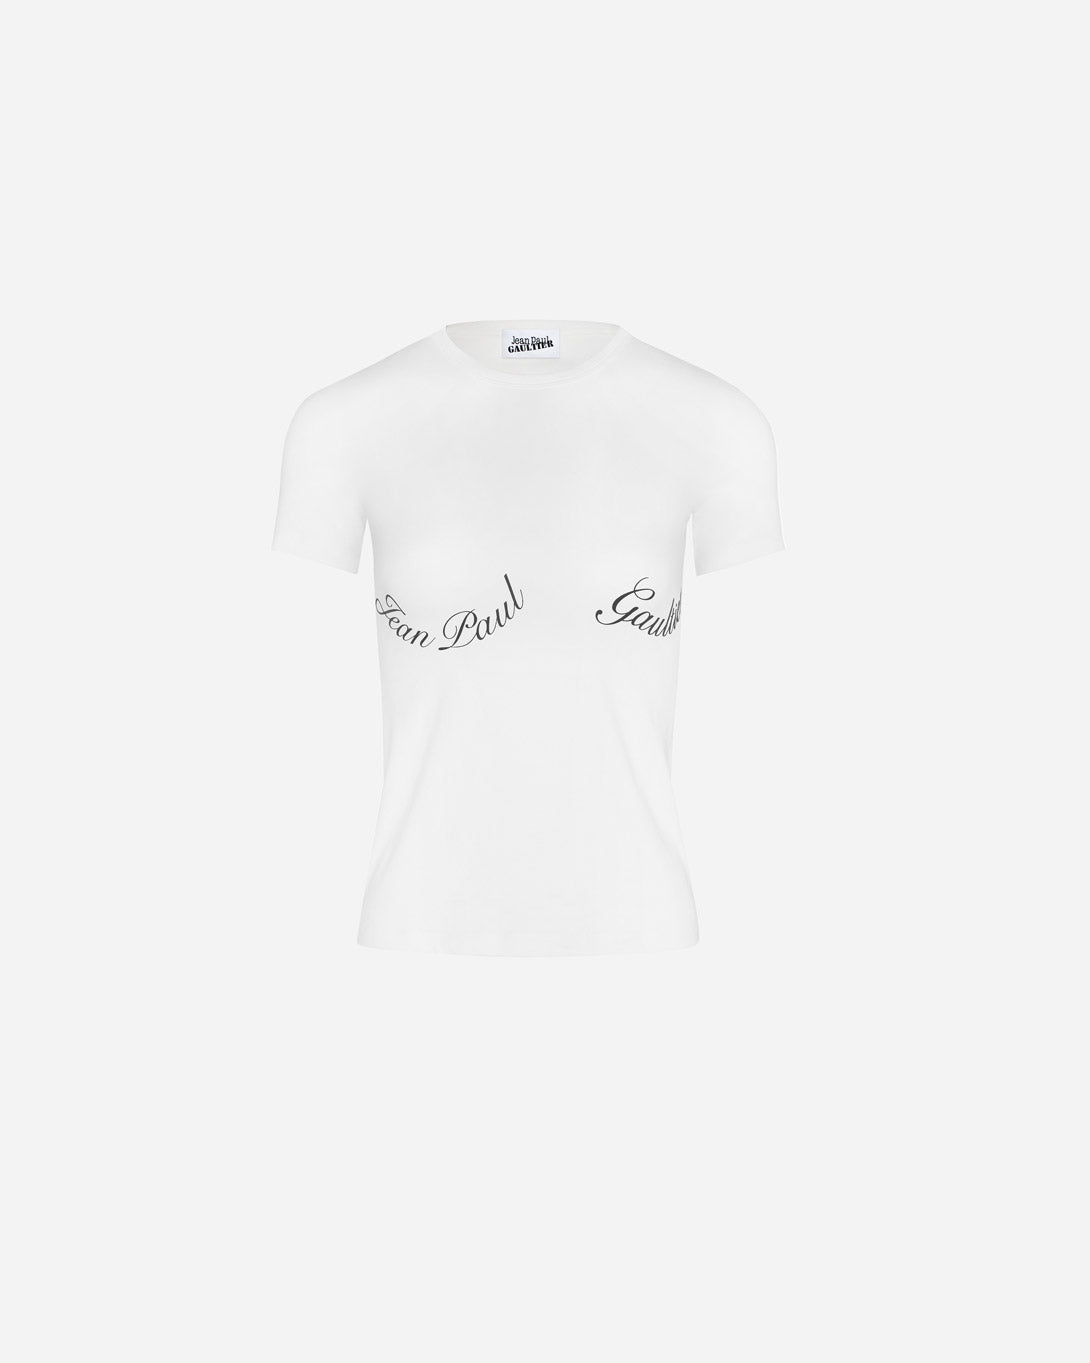 Cotton Baby Tee-Shirt With "Jean Paul Gaultier" Detail - Tops - Jean Paul Gaultier - Elevastor